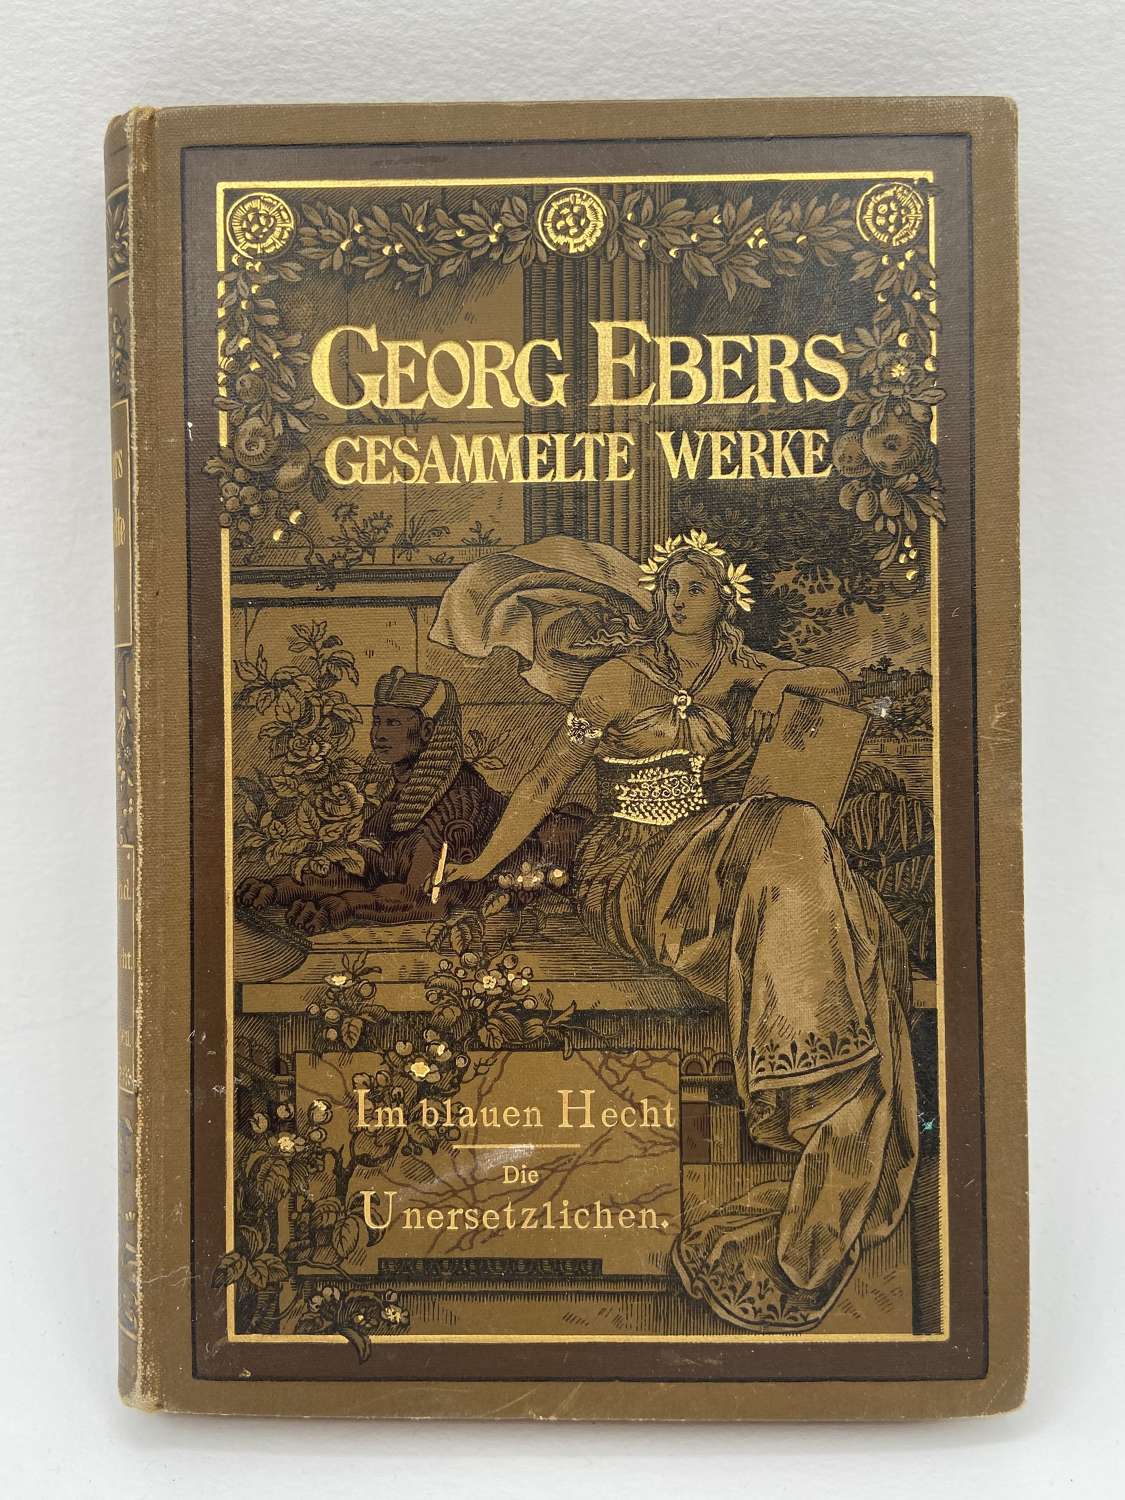 Antique Beautiful Cover 1880s Georg Ebers Gesammelte Werke In The Blue